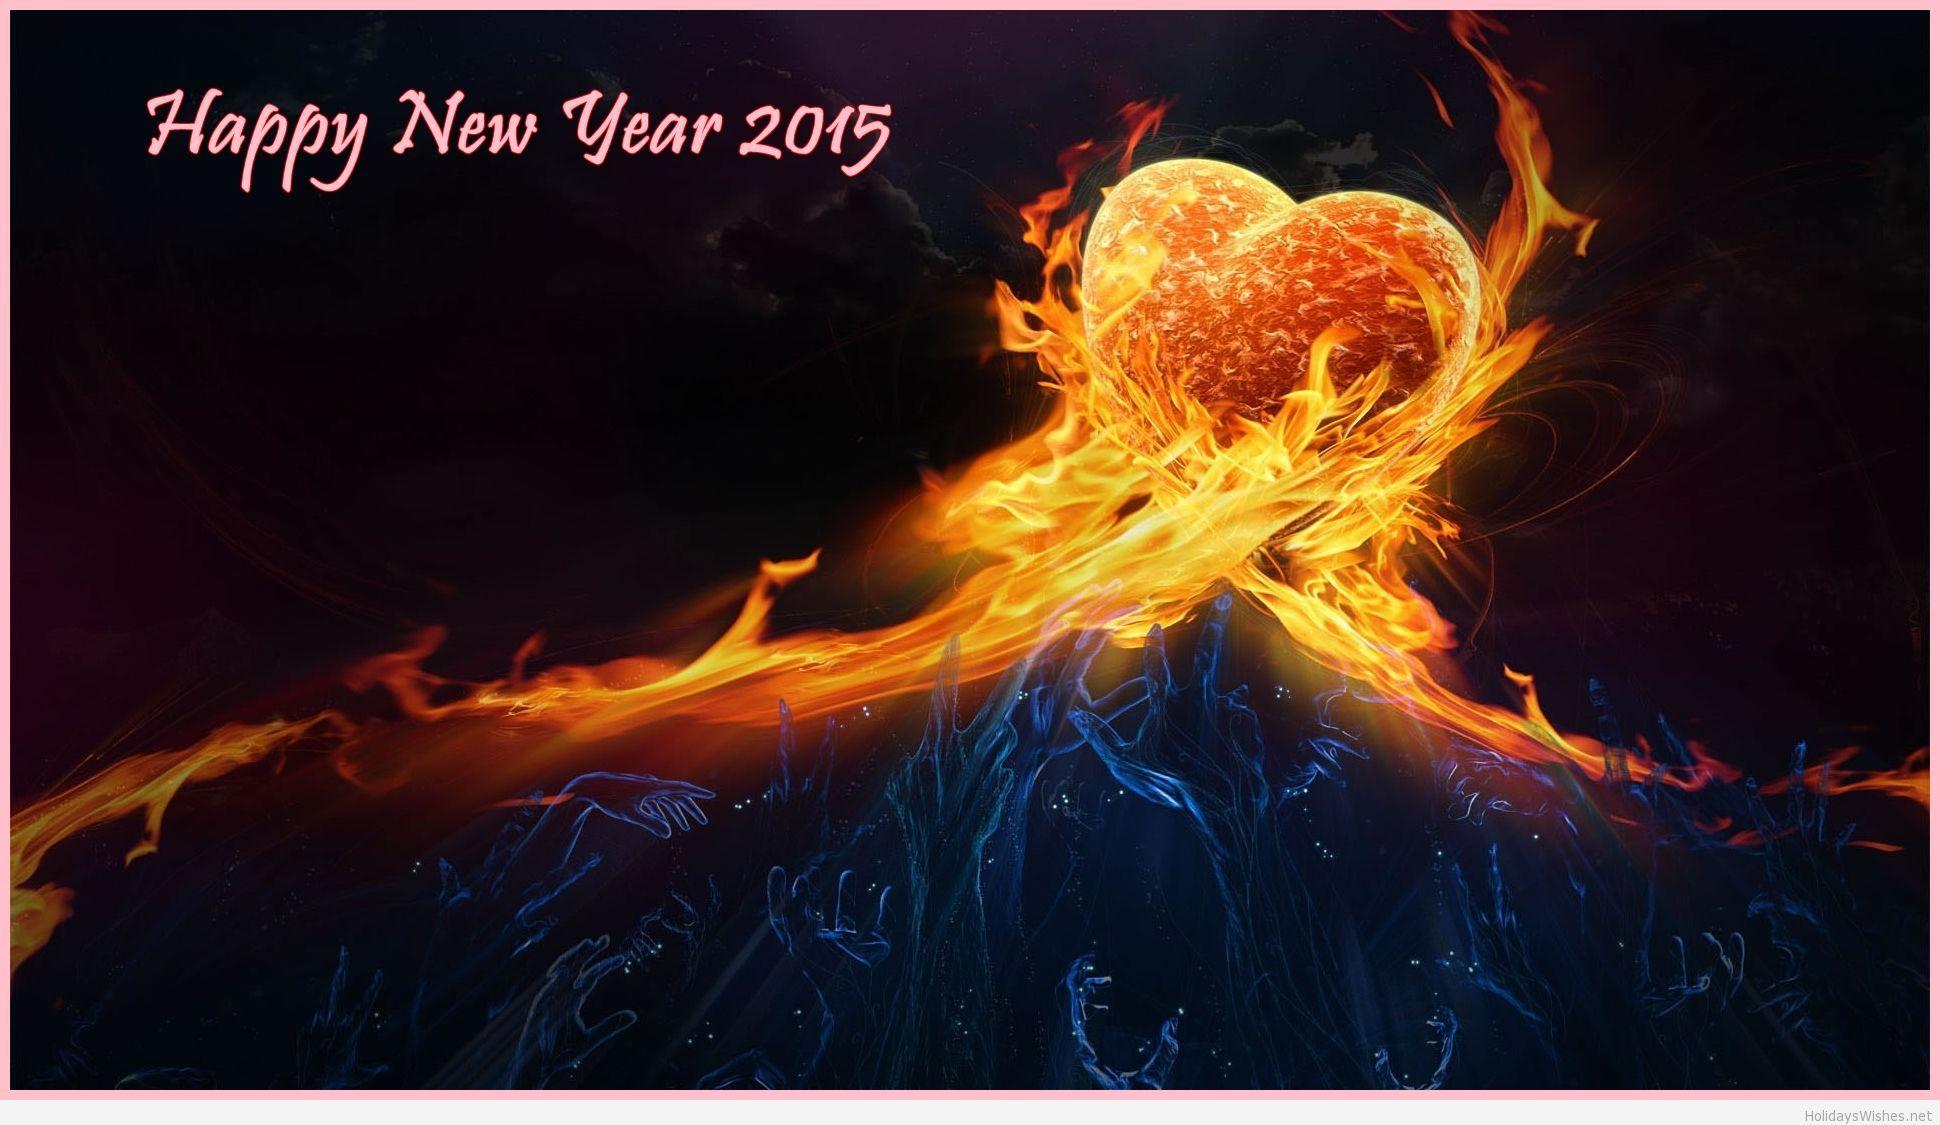 Love is on fire wallpaper 2015 happy new year